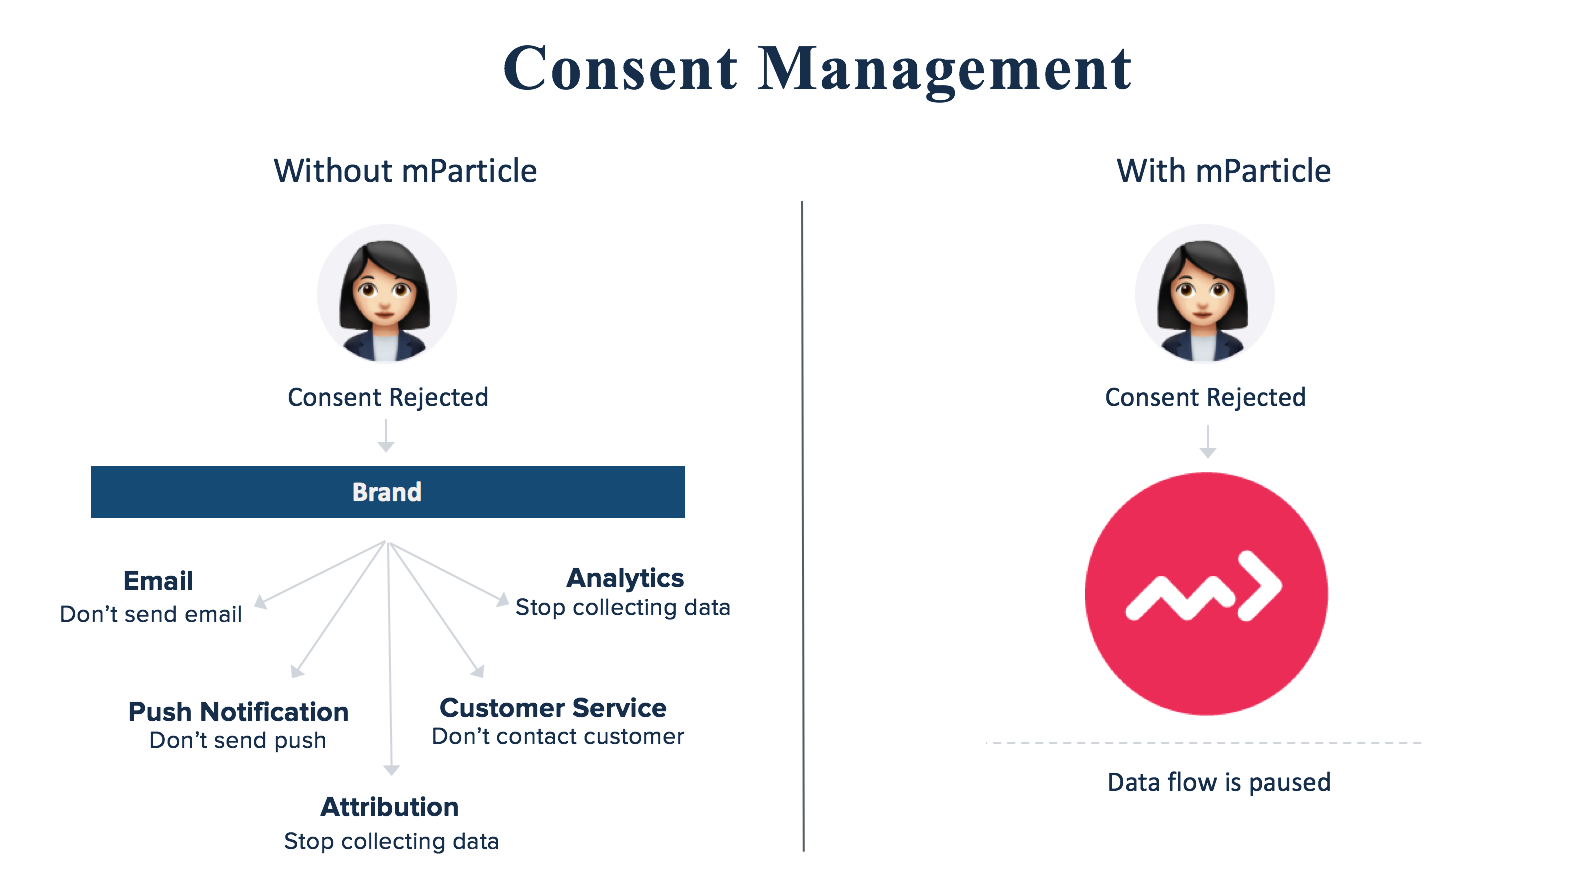 Consent Management